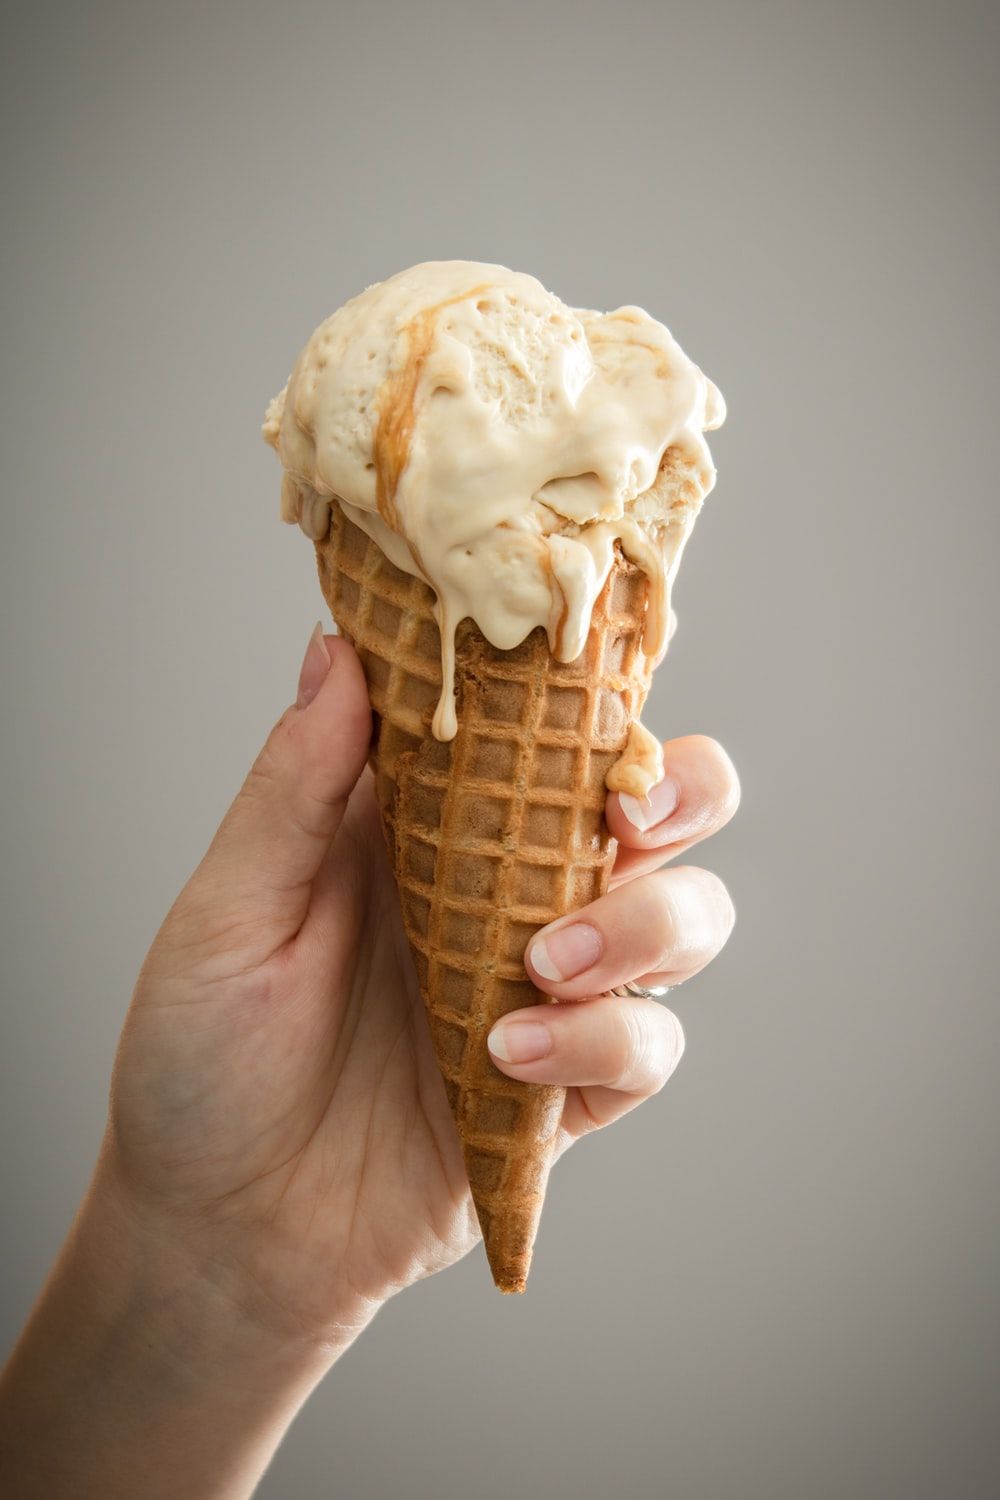 Vanilla Ice Cream Picture. Download Free Image